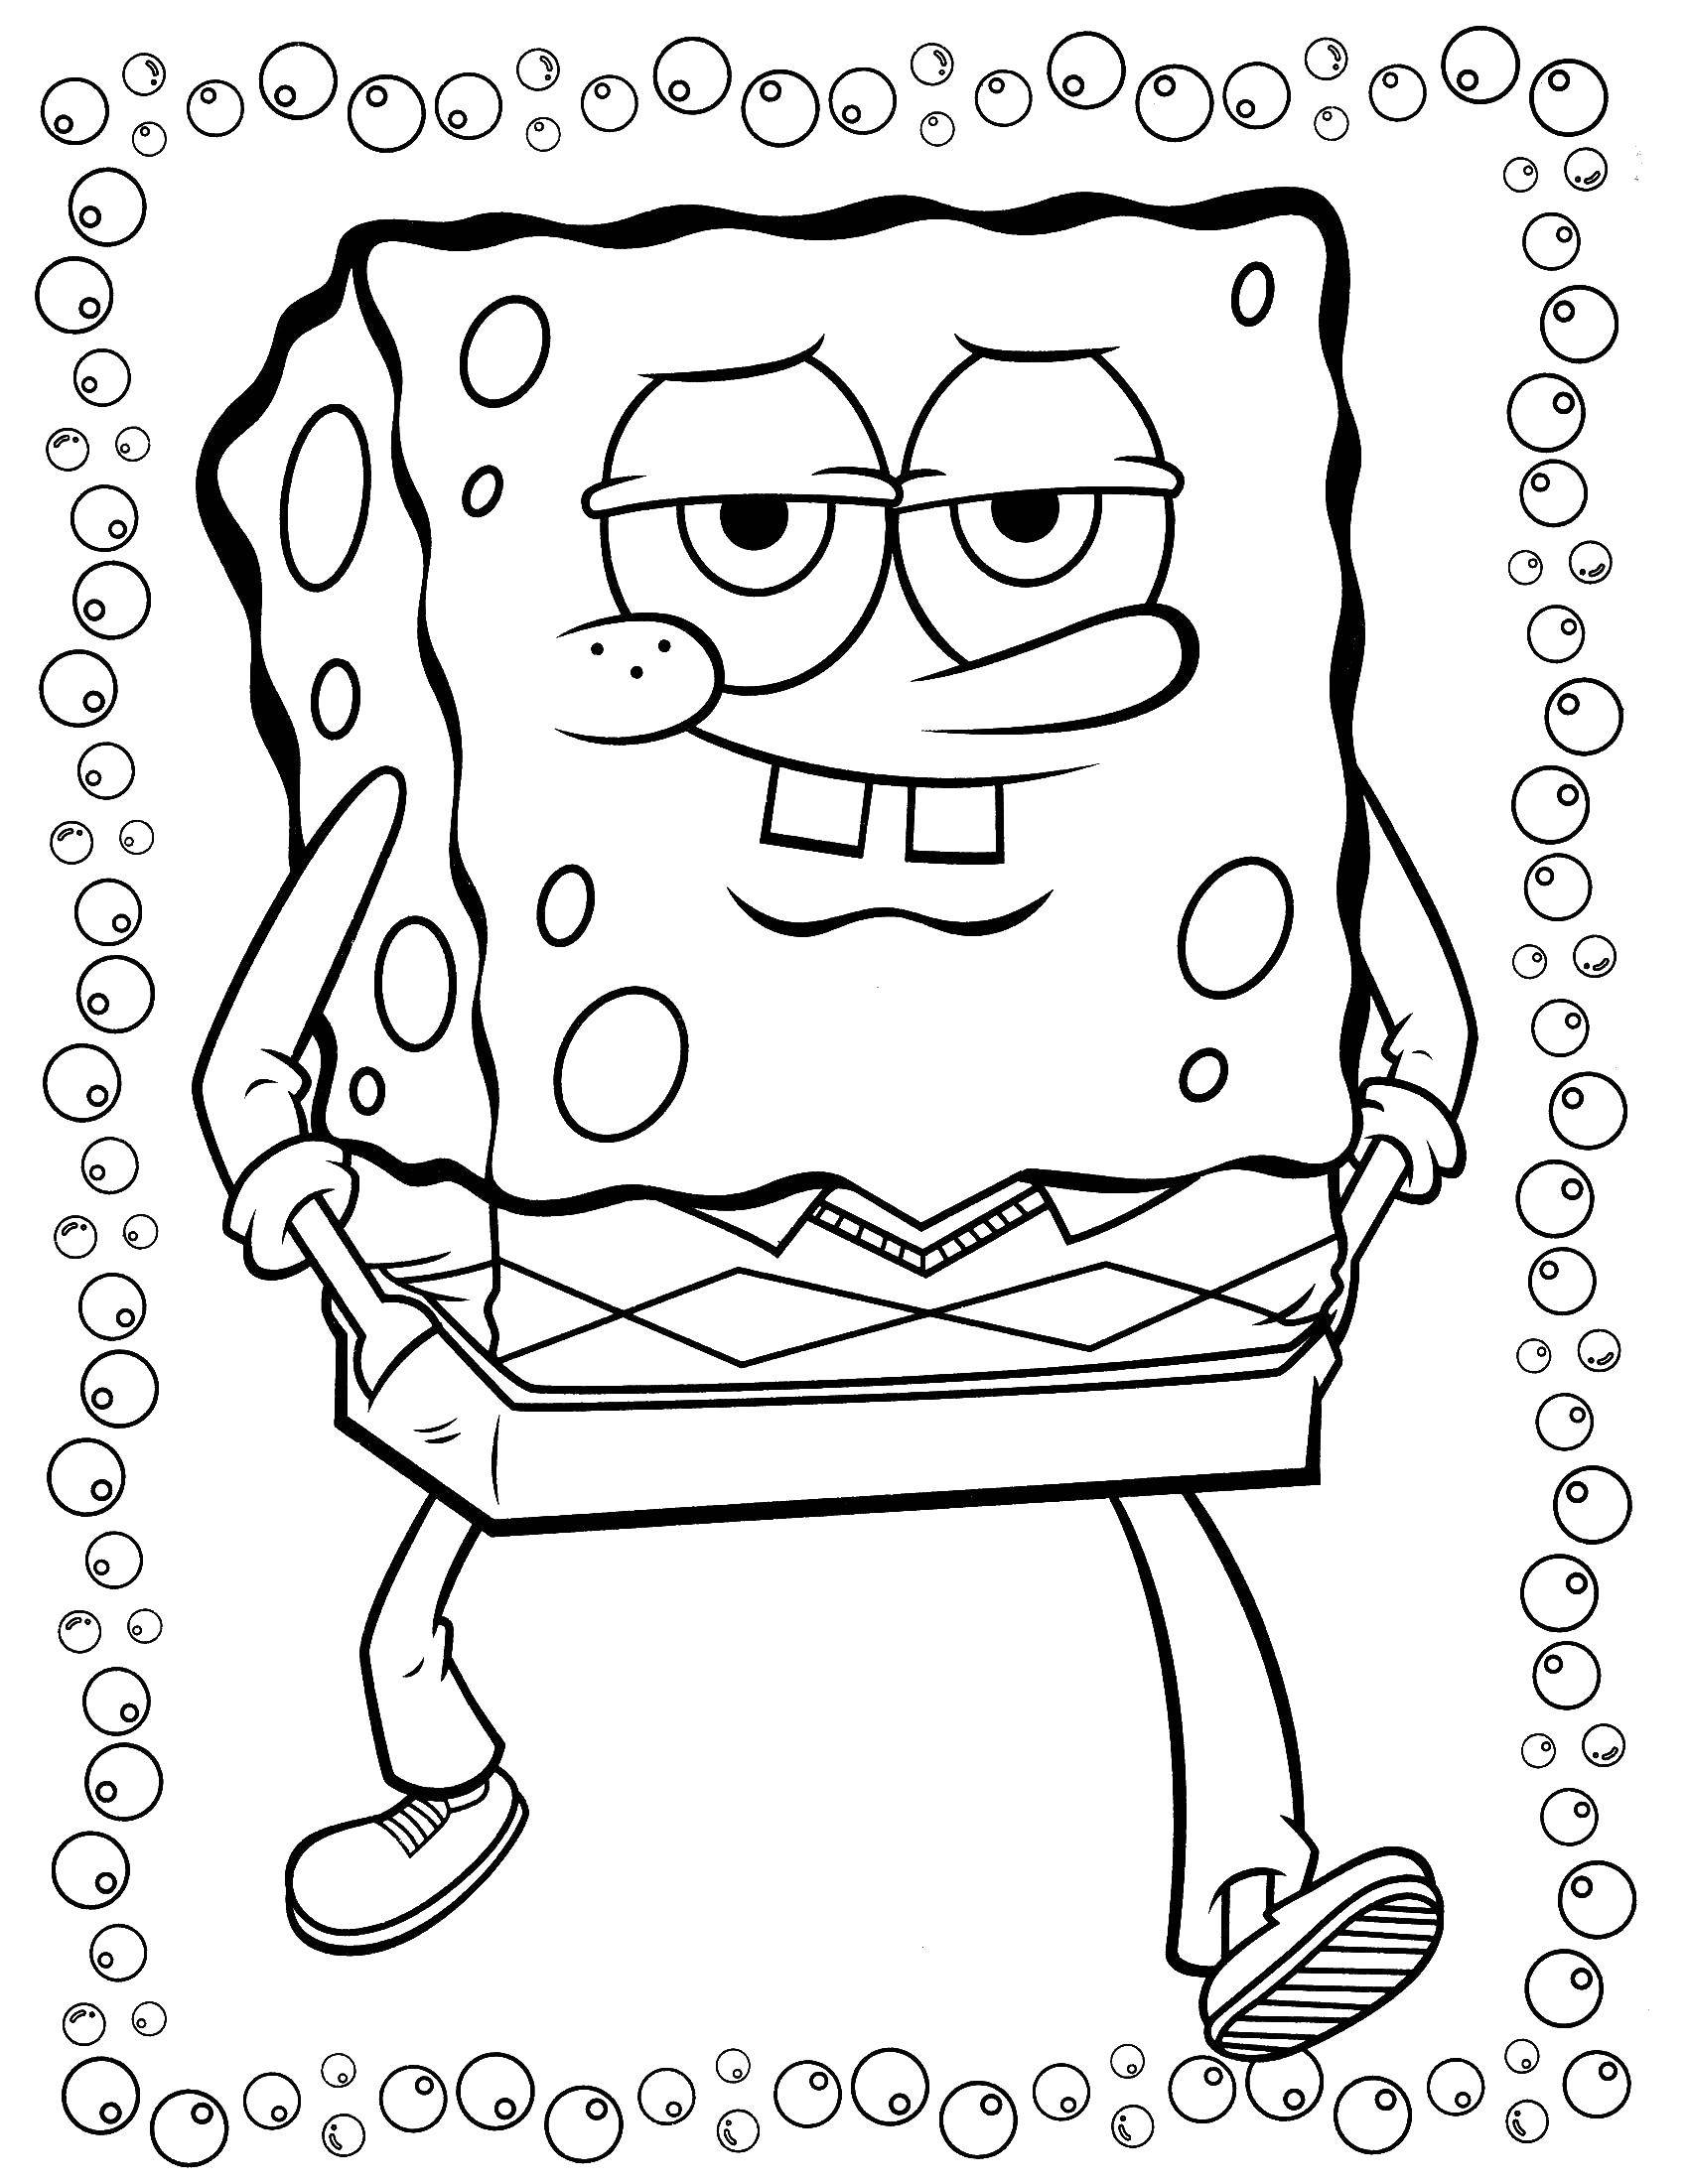 Coloring Spongebob Squarepants. Category Spongebob. Tags:  spongebob Squarepants.